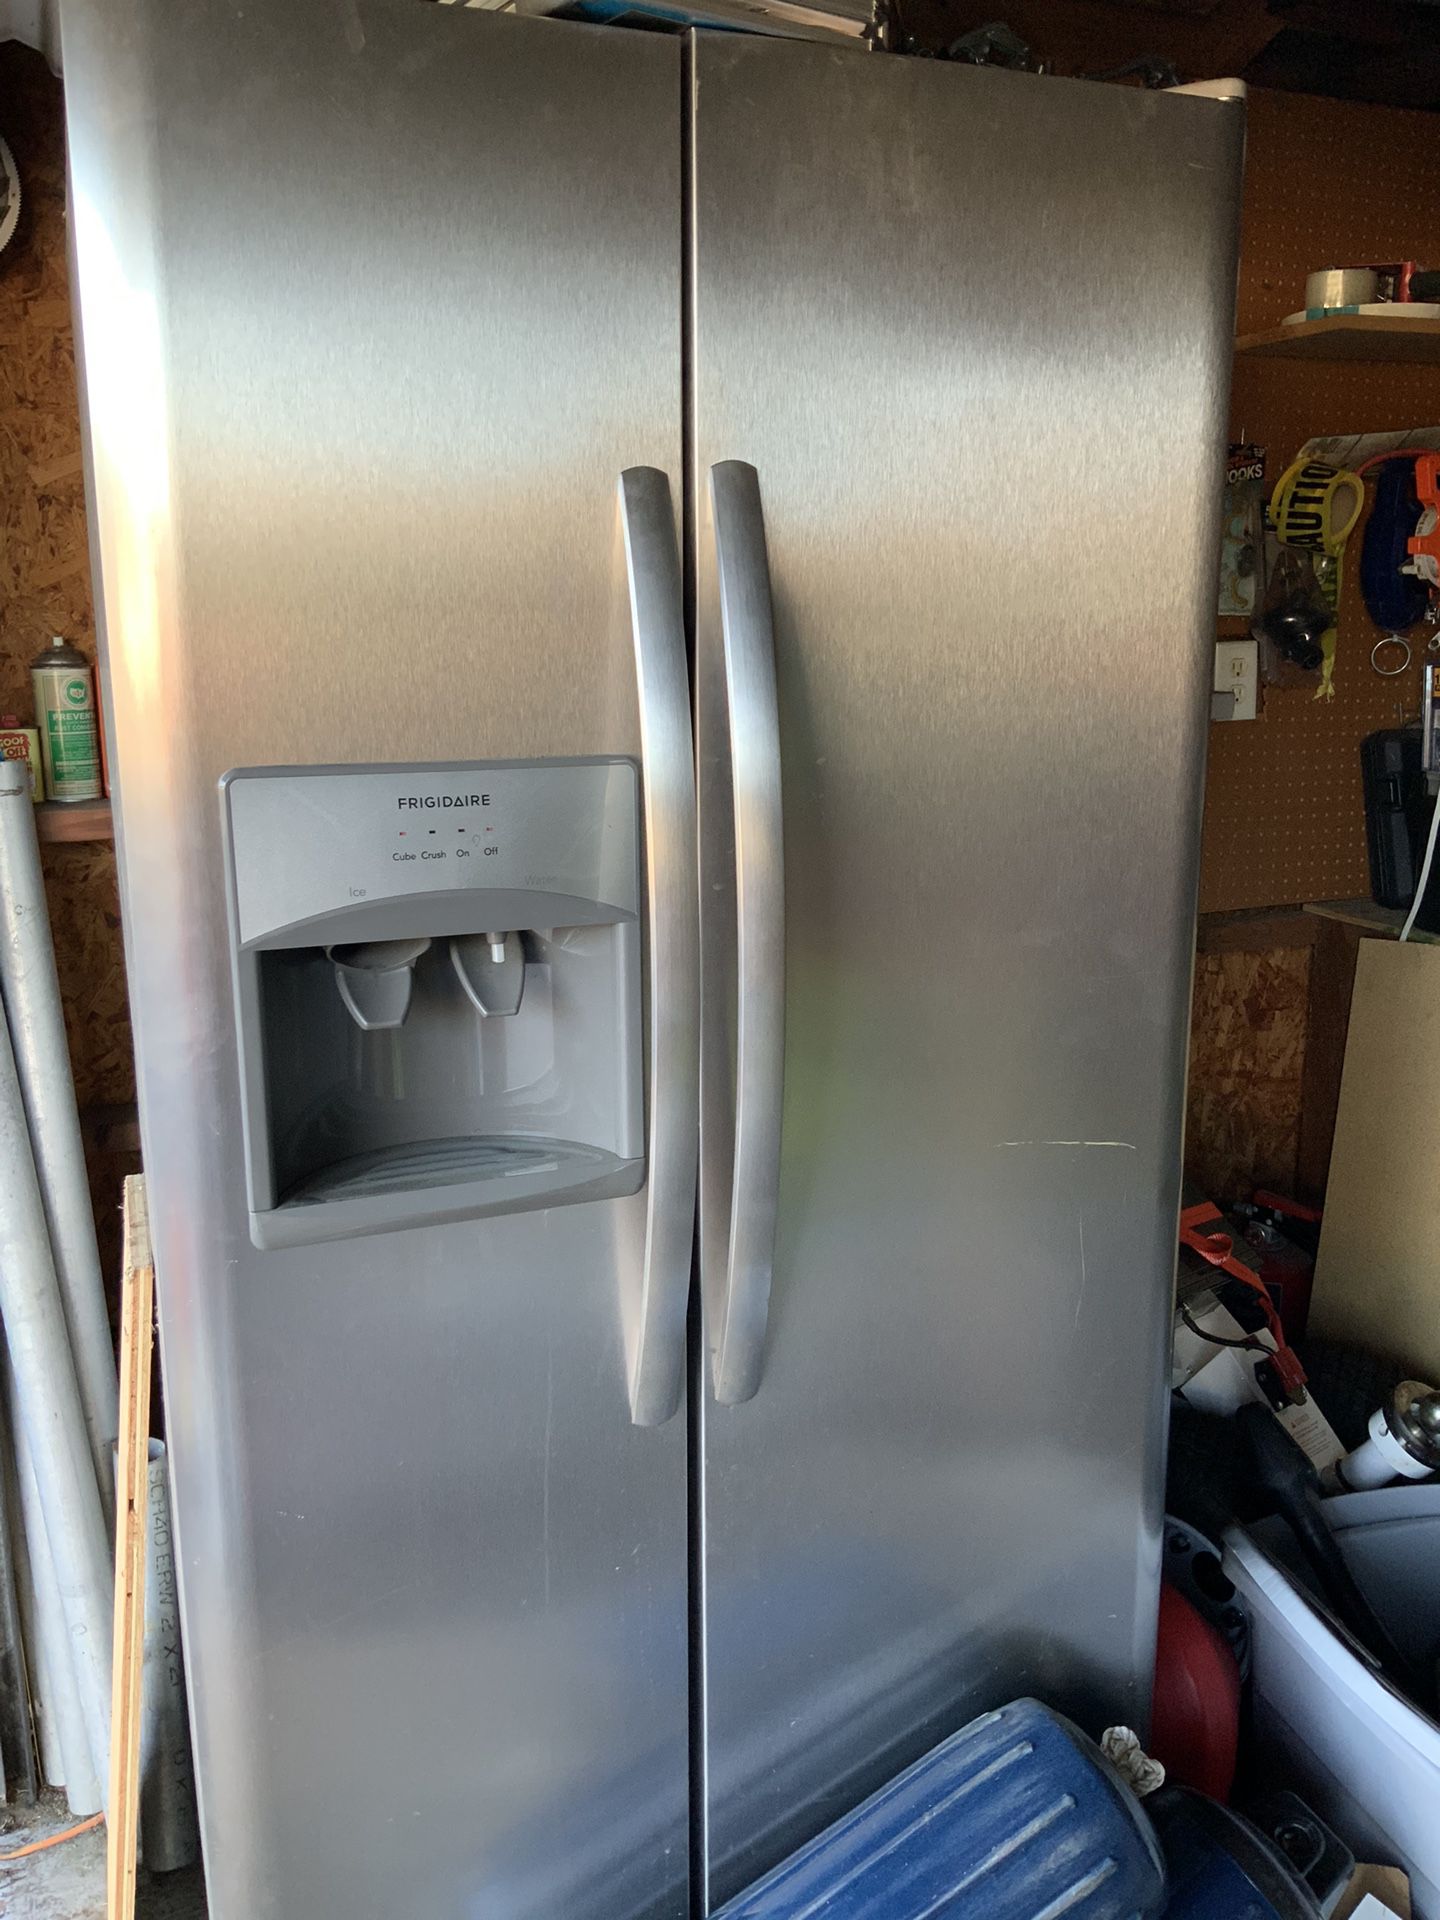 Nice Functioning Refrigerator